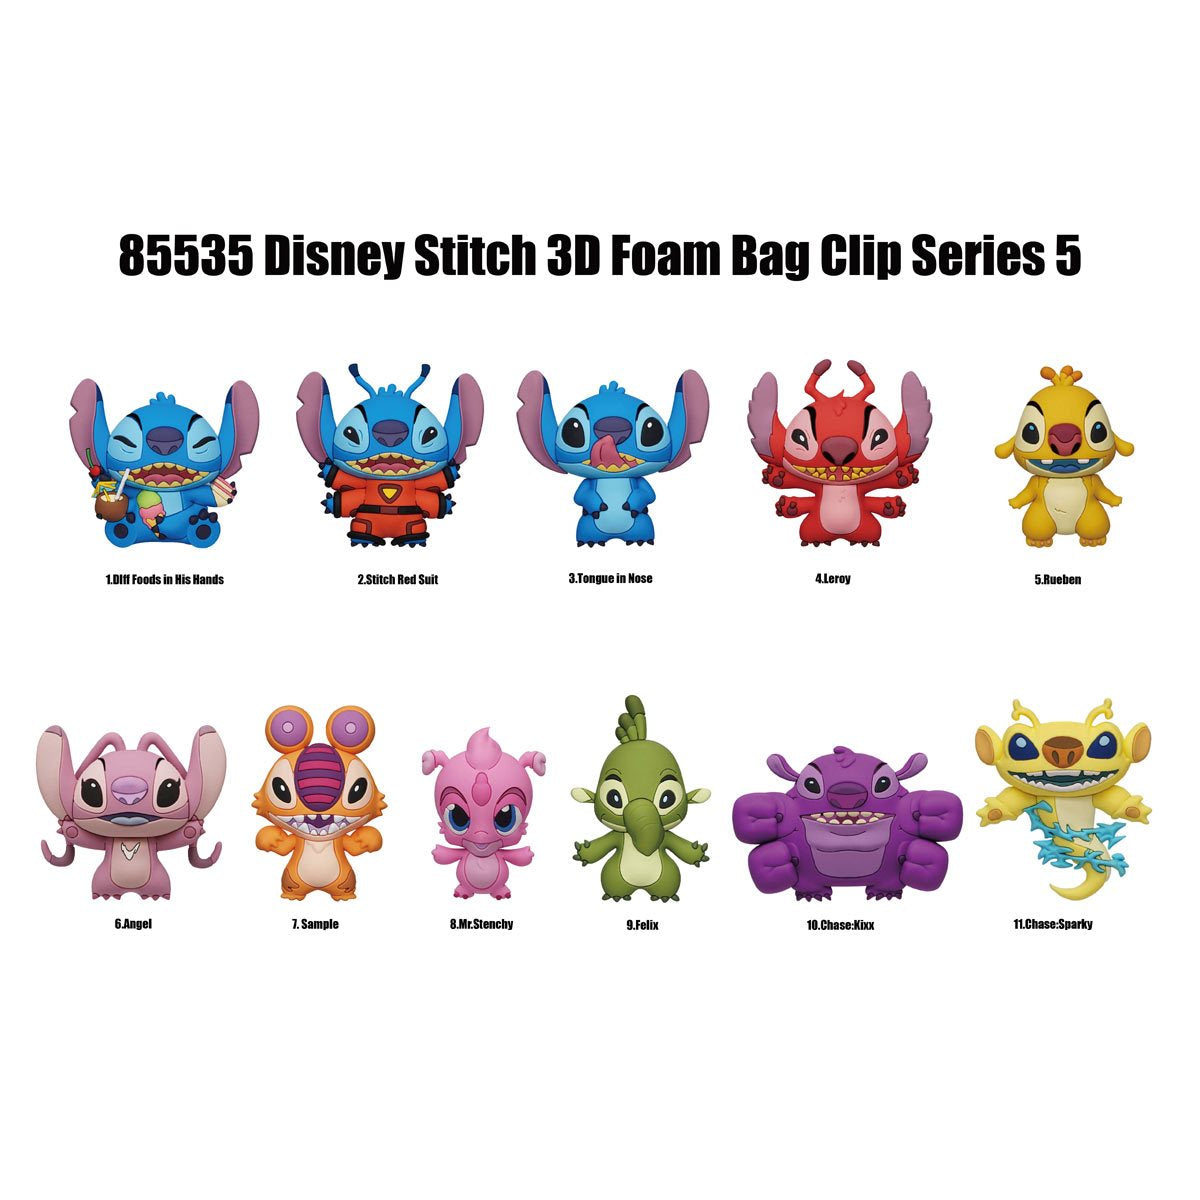 Dragon Ball Z Characters Series 5 Blind Bag Figural Bag Clip